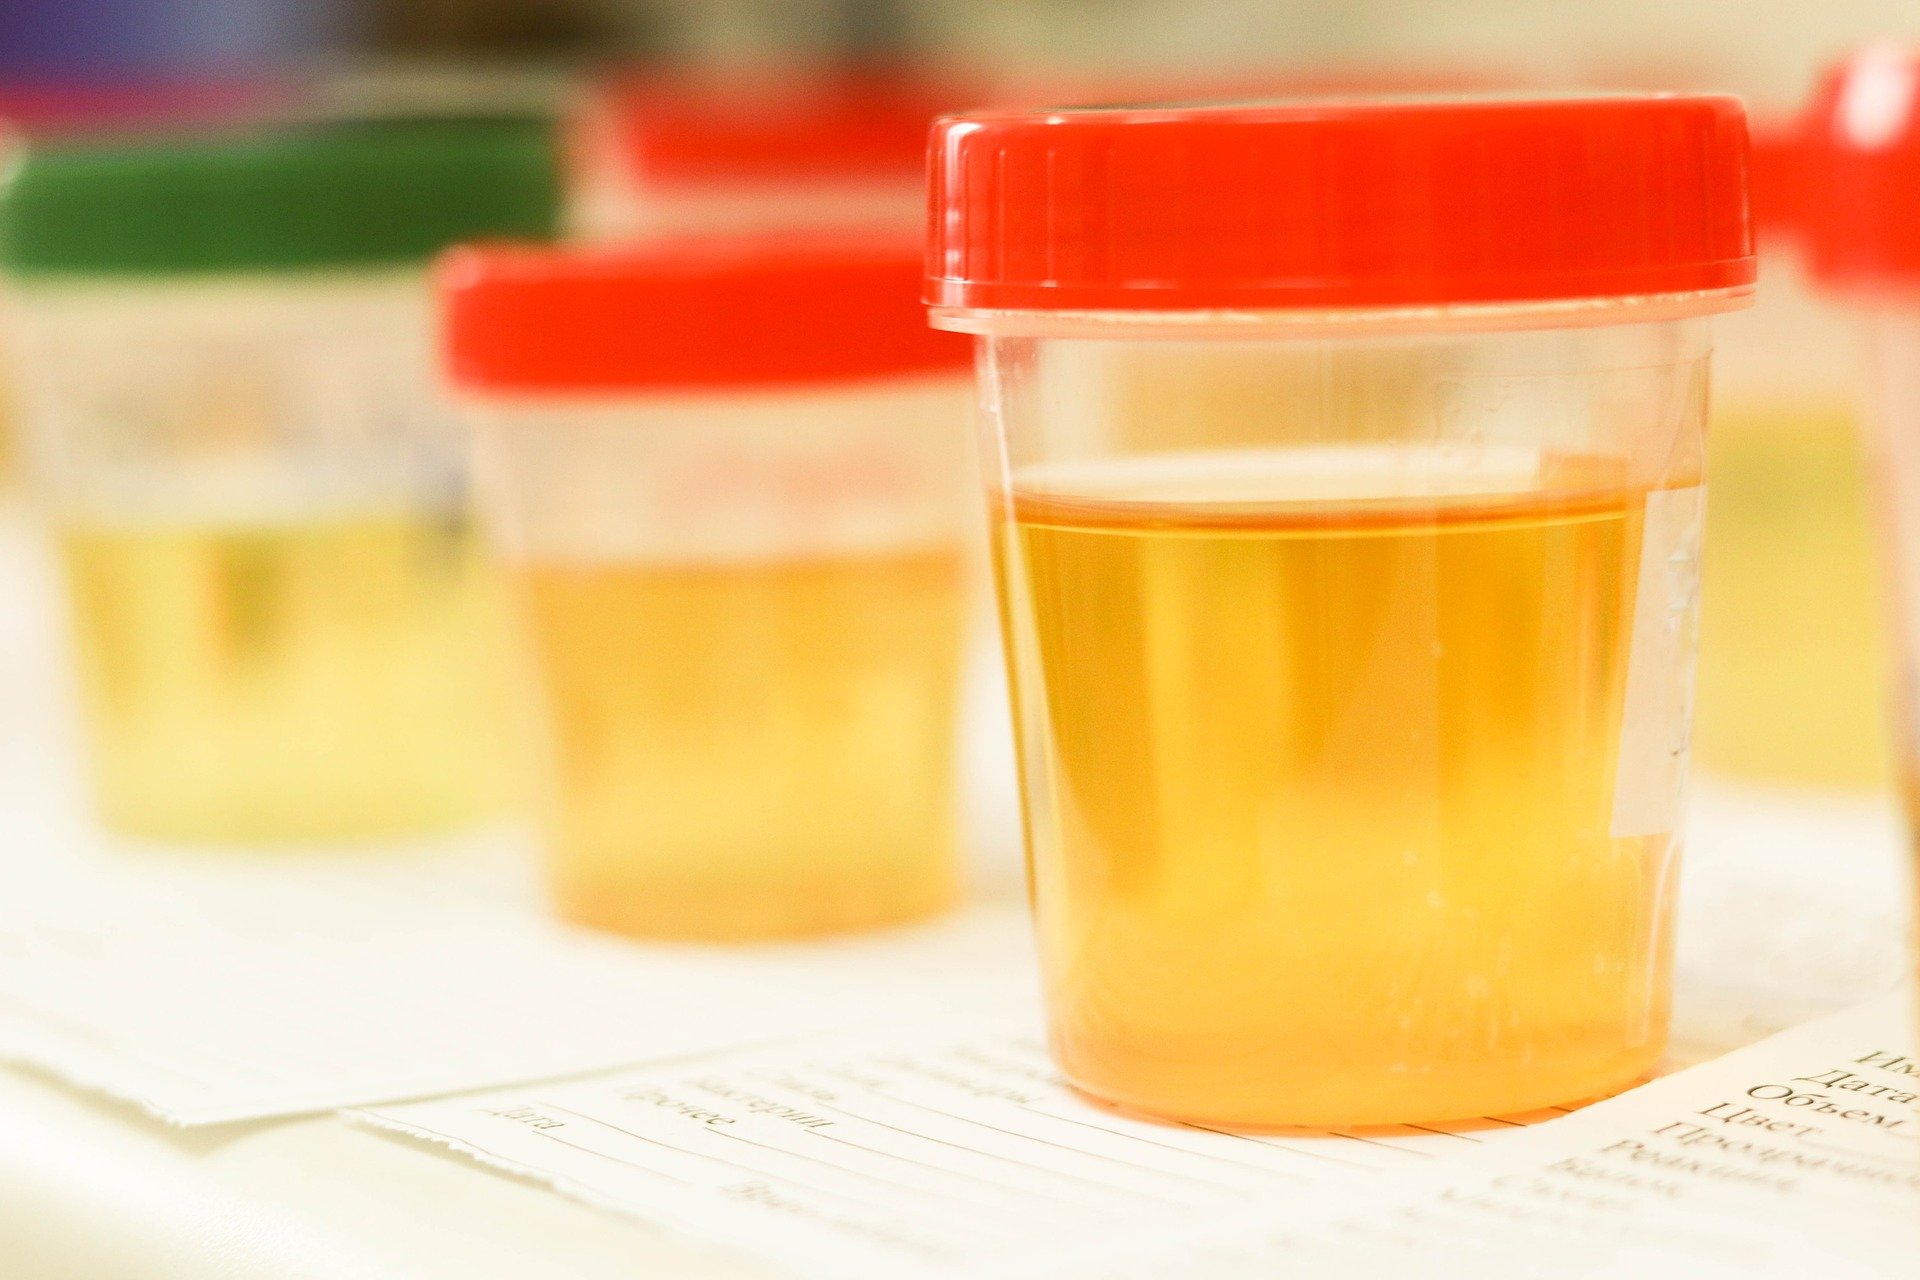 Types of Urine Tests